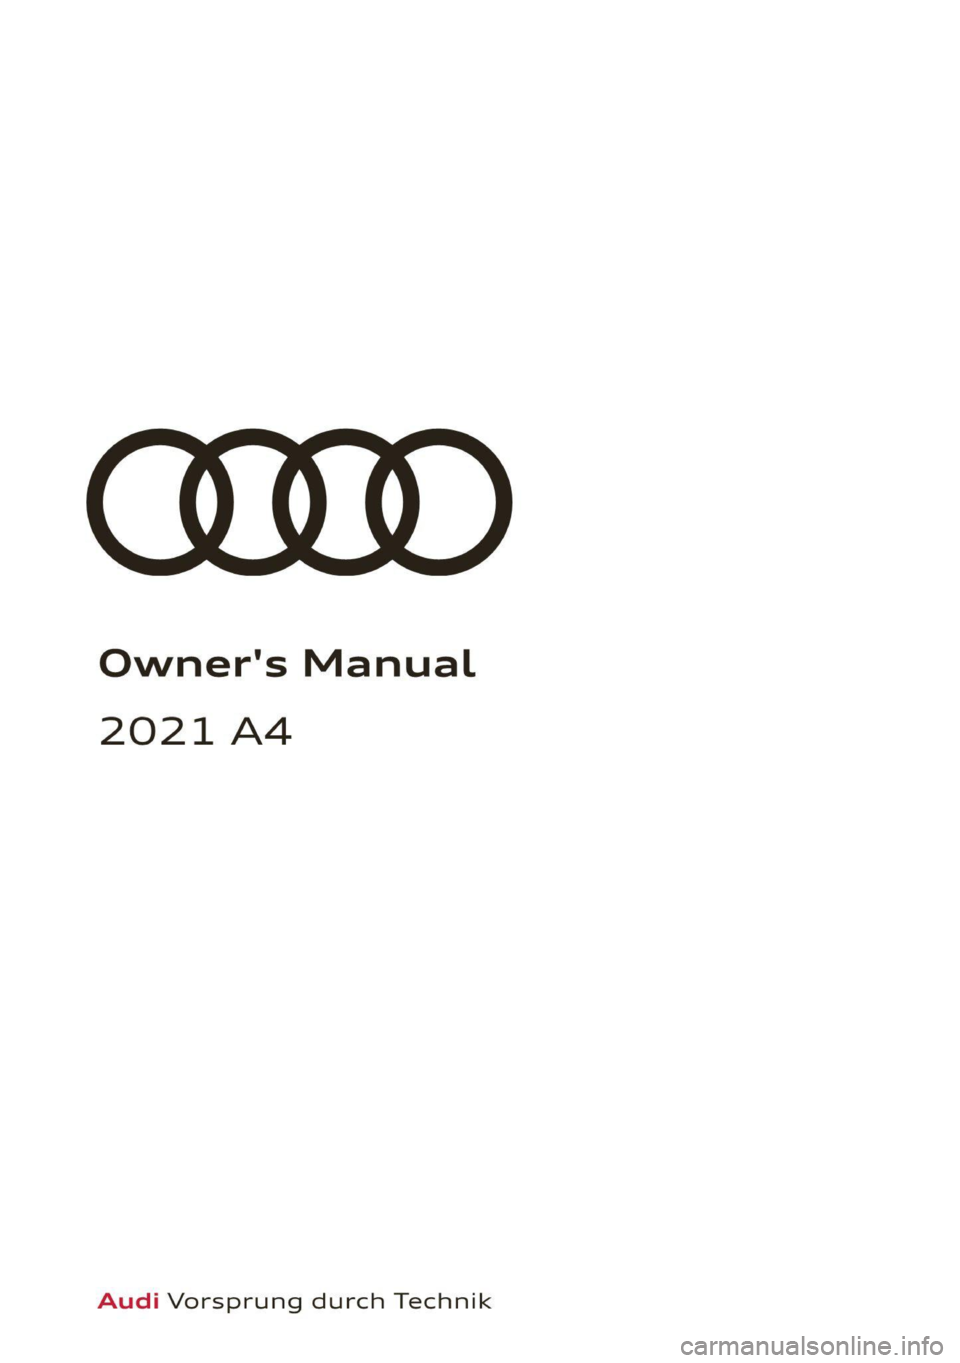 AUDI A4 2021  Owner´s Manual Owner's Manual 
2021 A4 
Audi Vorsprung durch Technik  